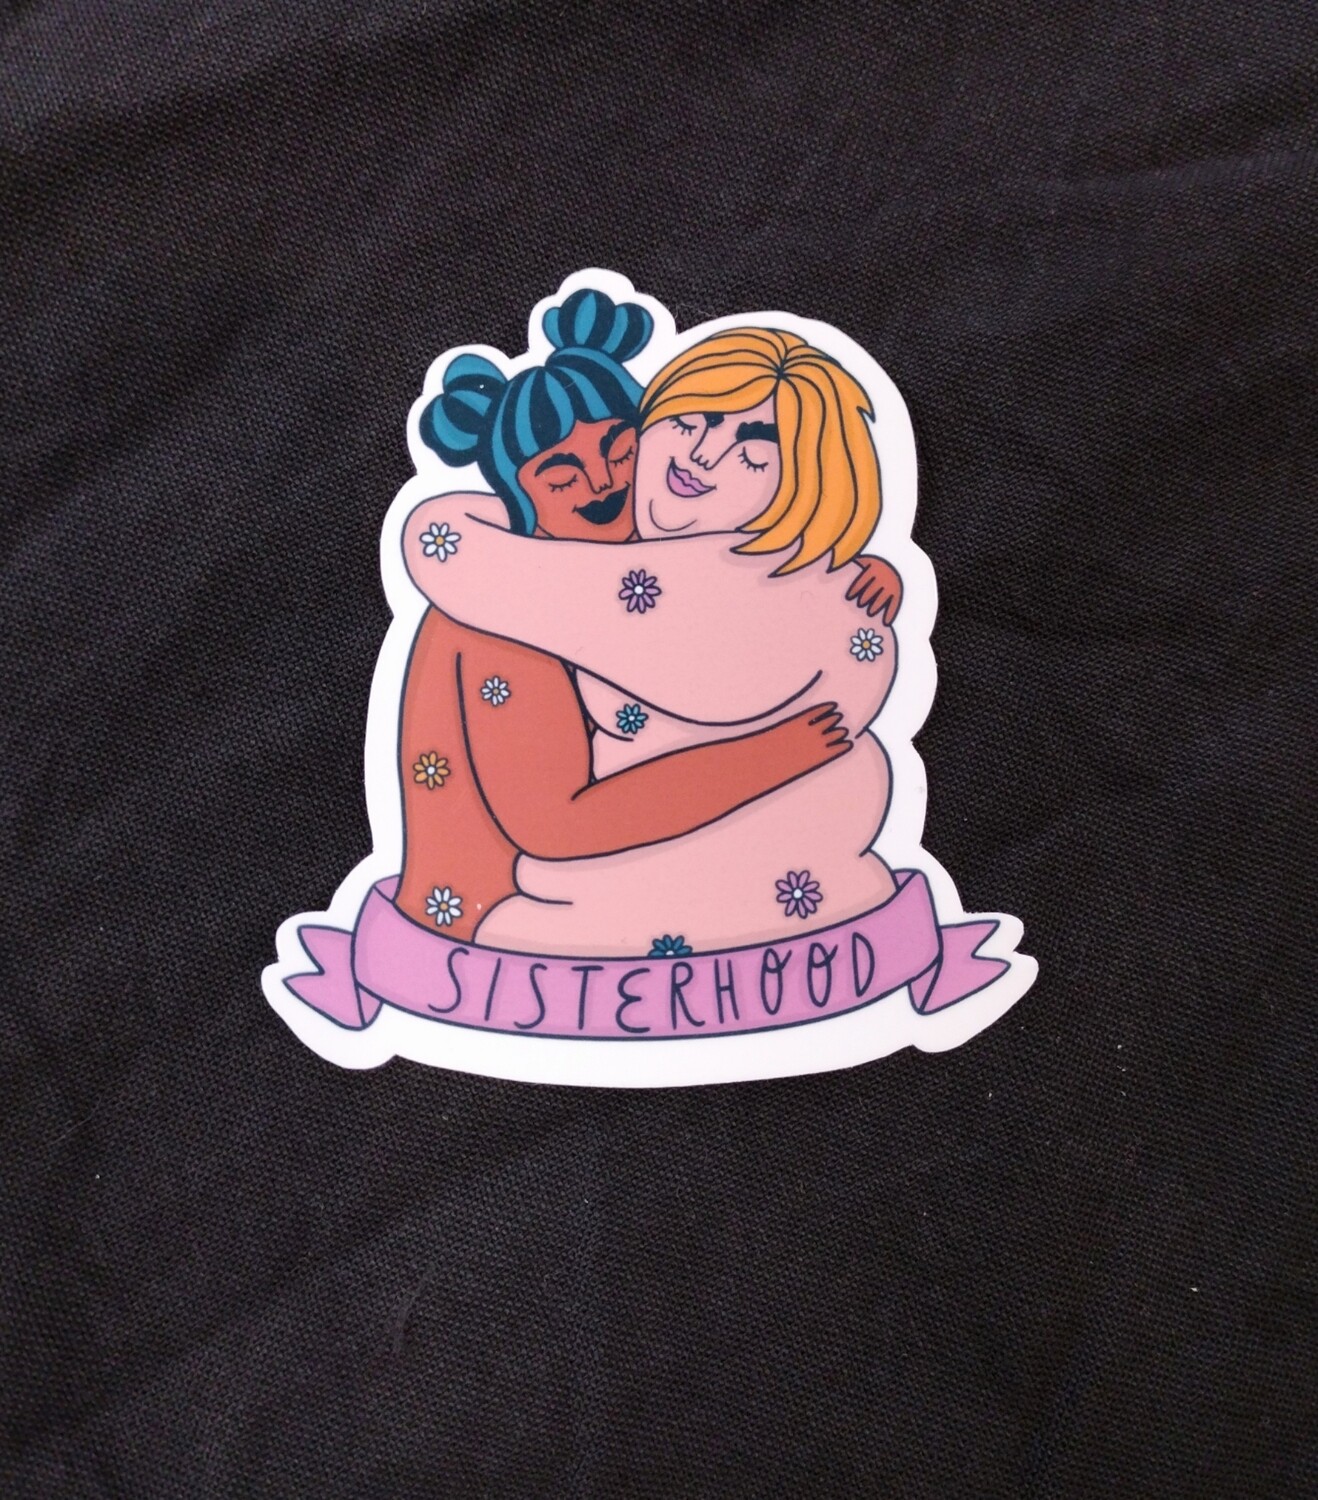 Sisterhood - Sticker by Chiaralascura